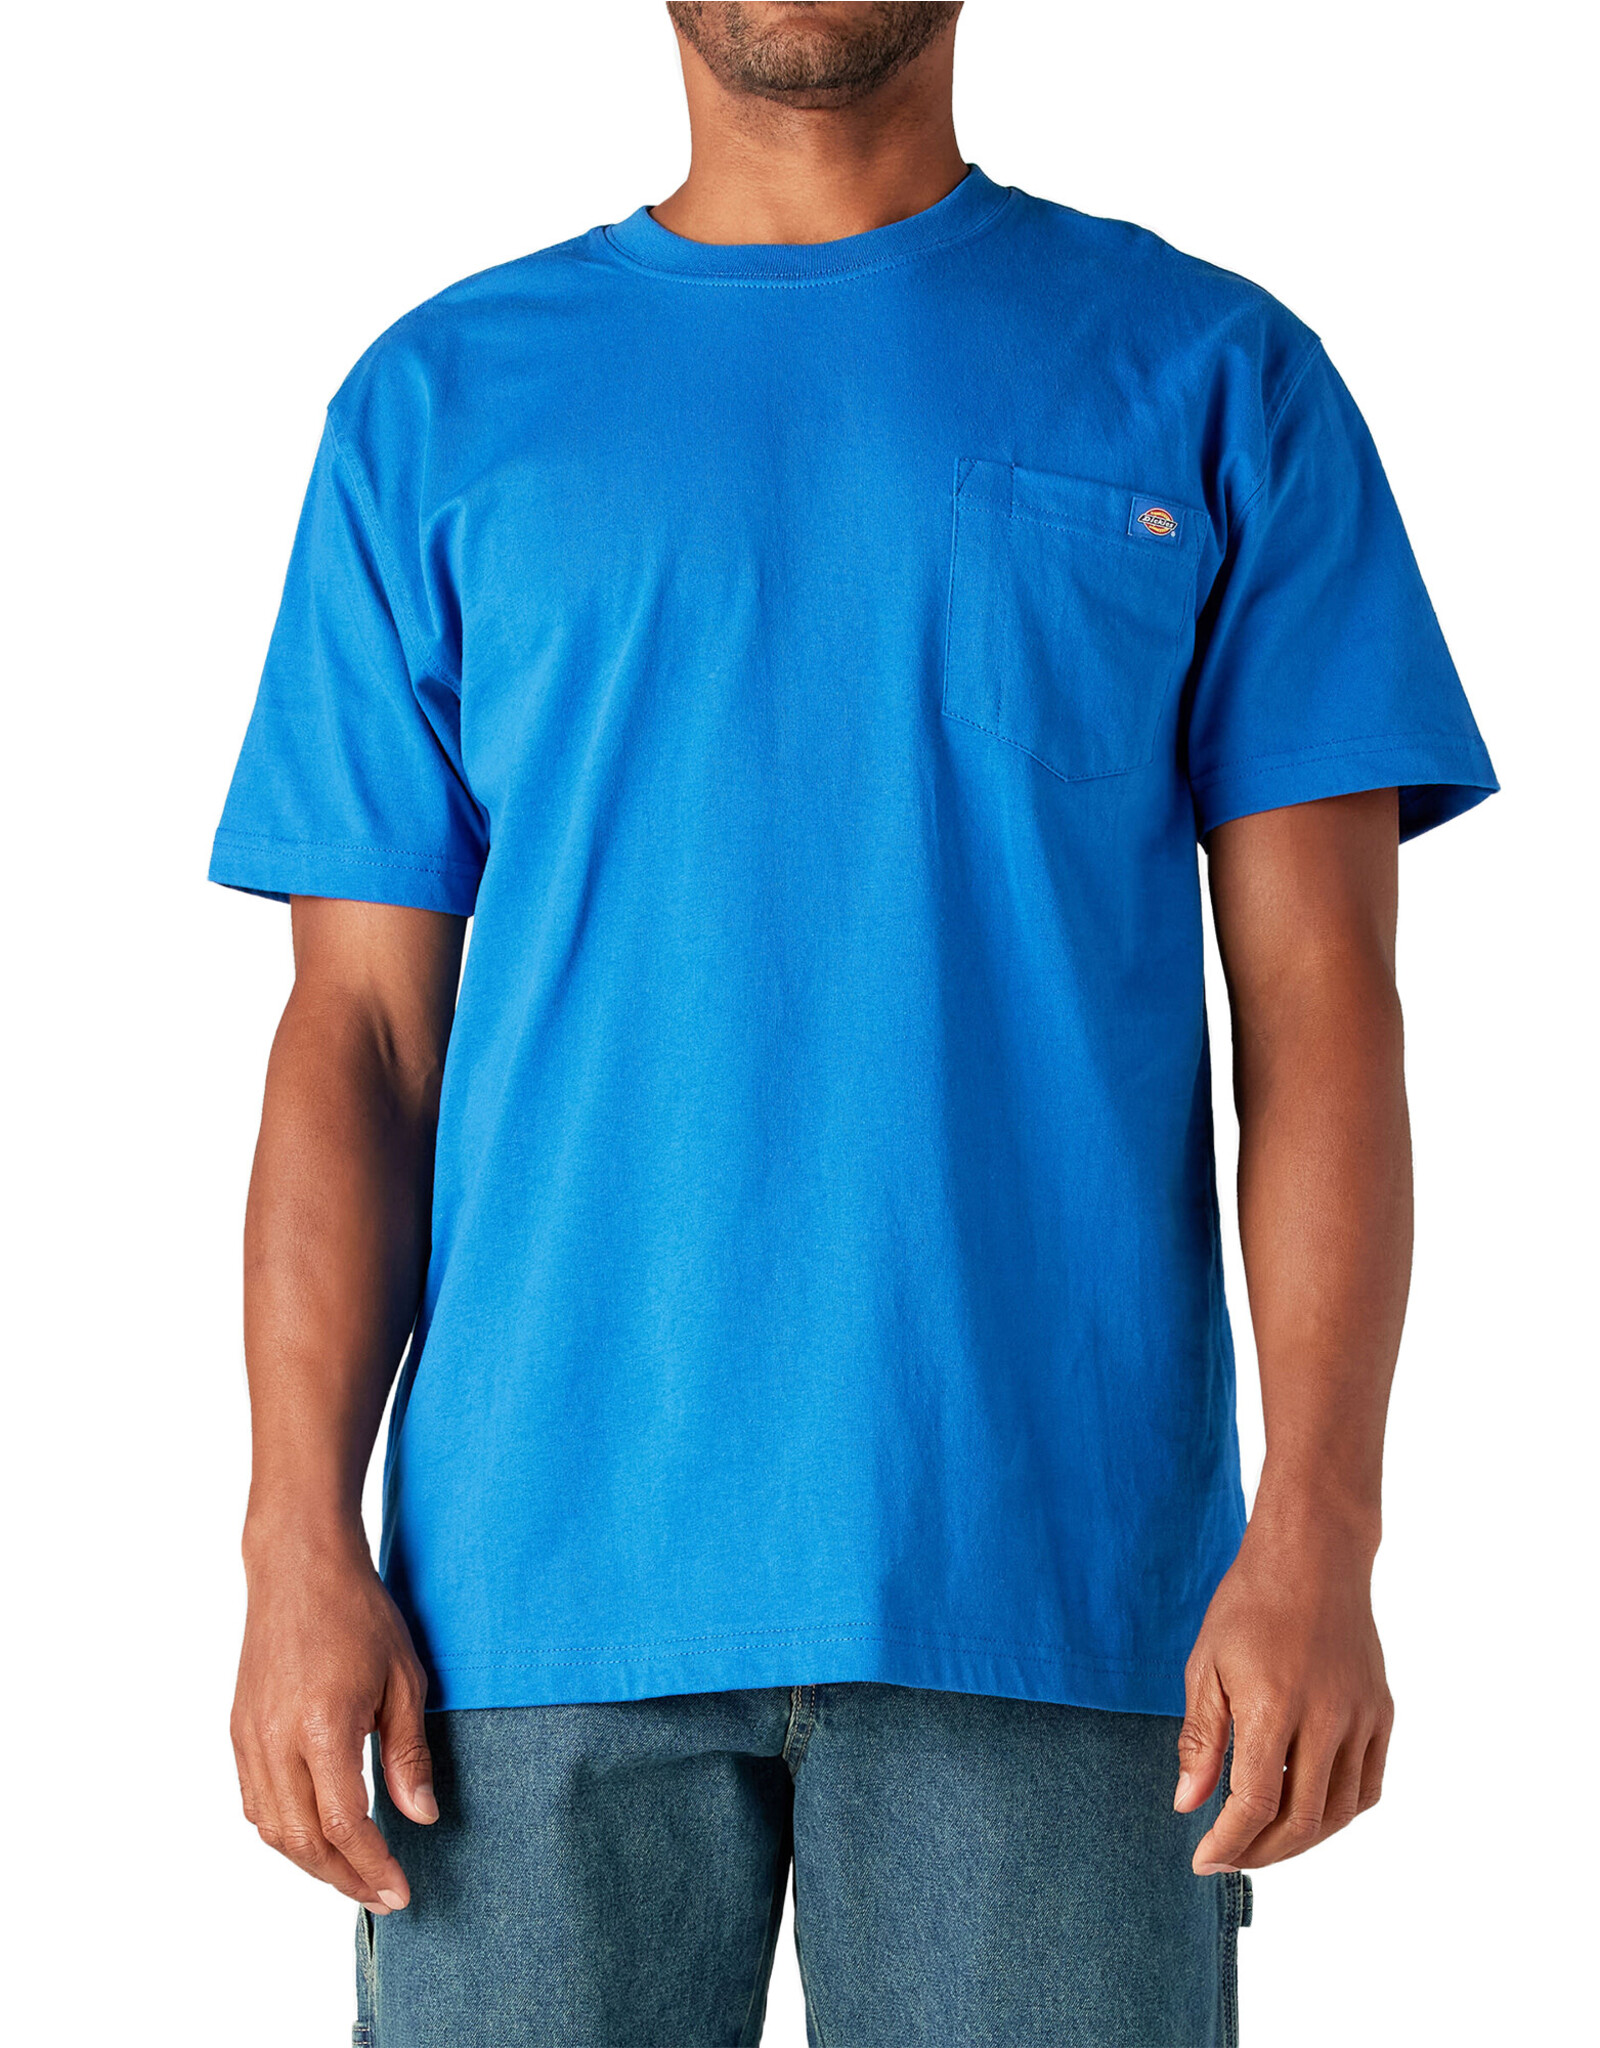 DICKIES Heavyweight Short Sleeve Pocket T-Shirt Royal Blue - WS450RB